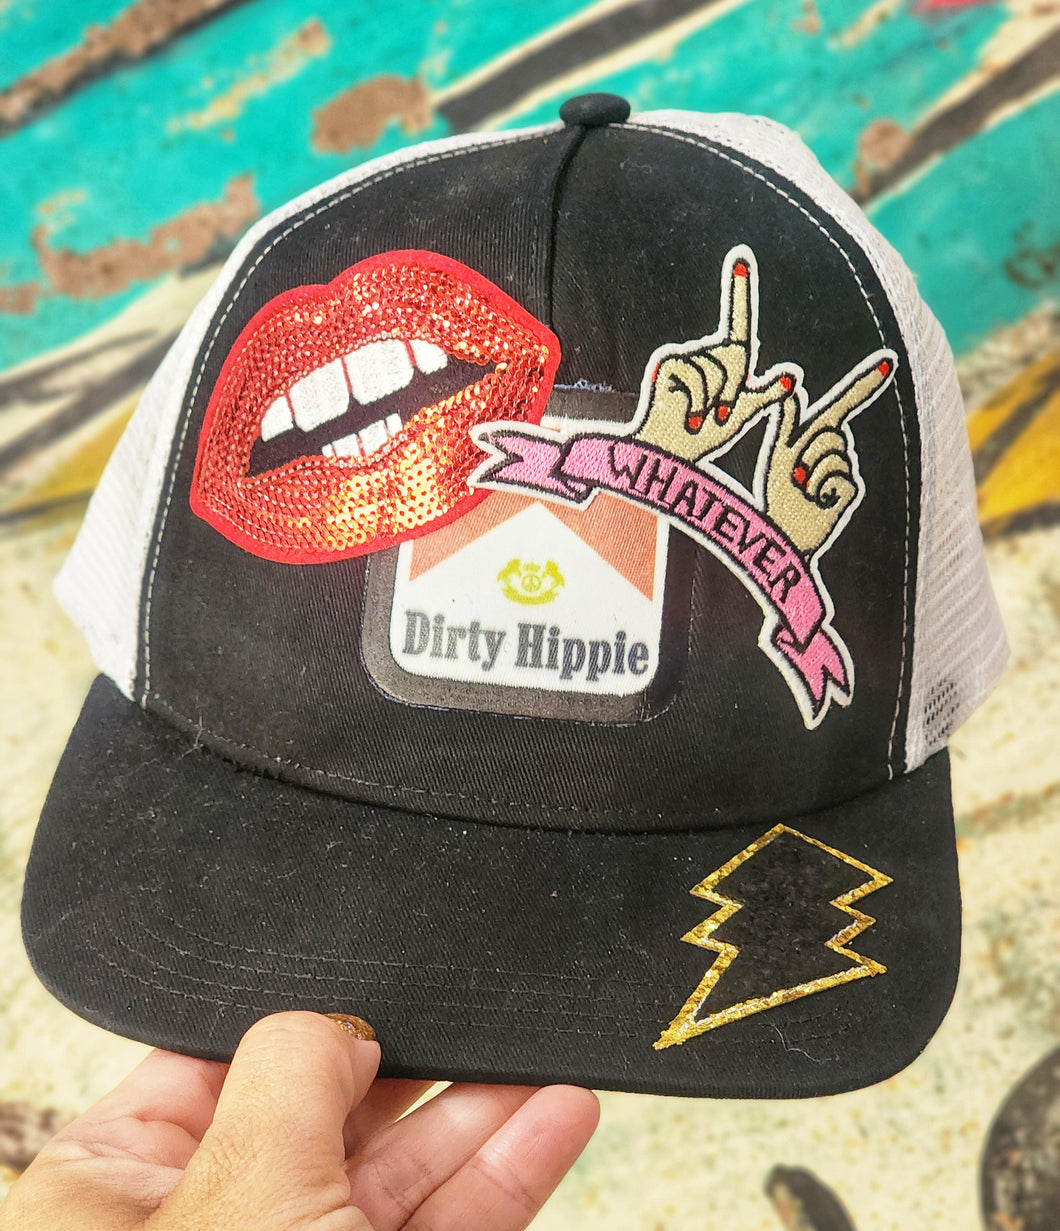 Dirty hippie custom trucker cap